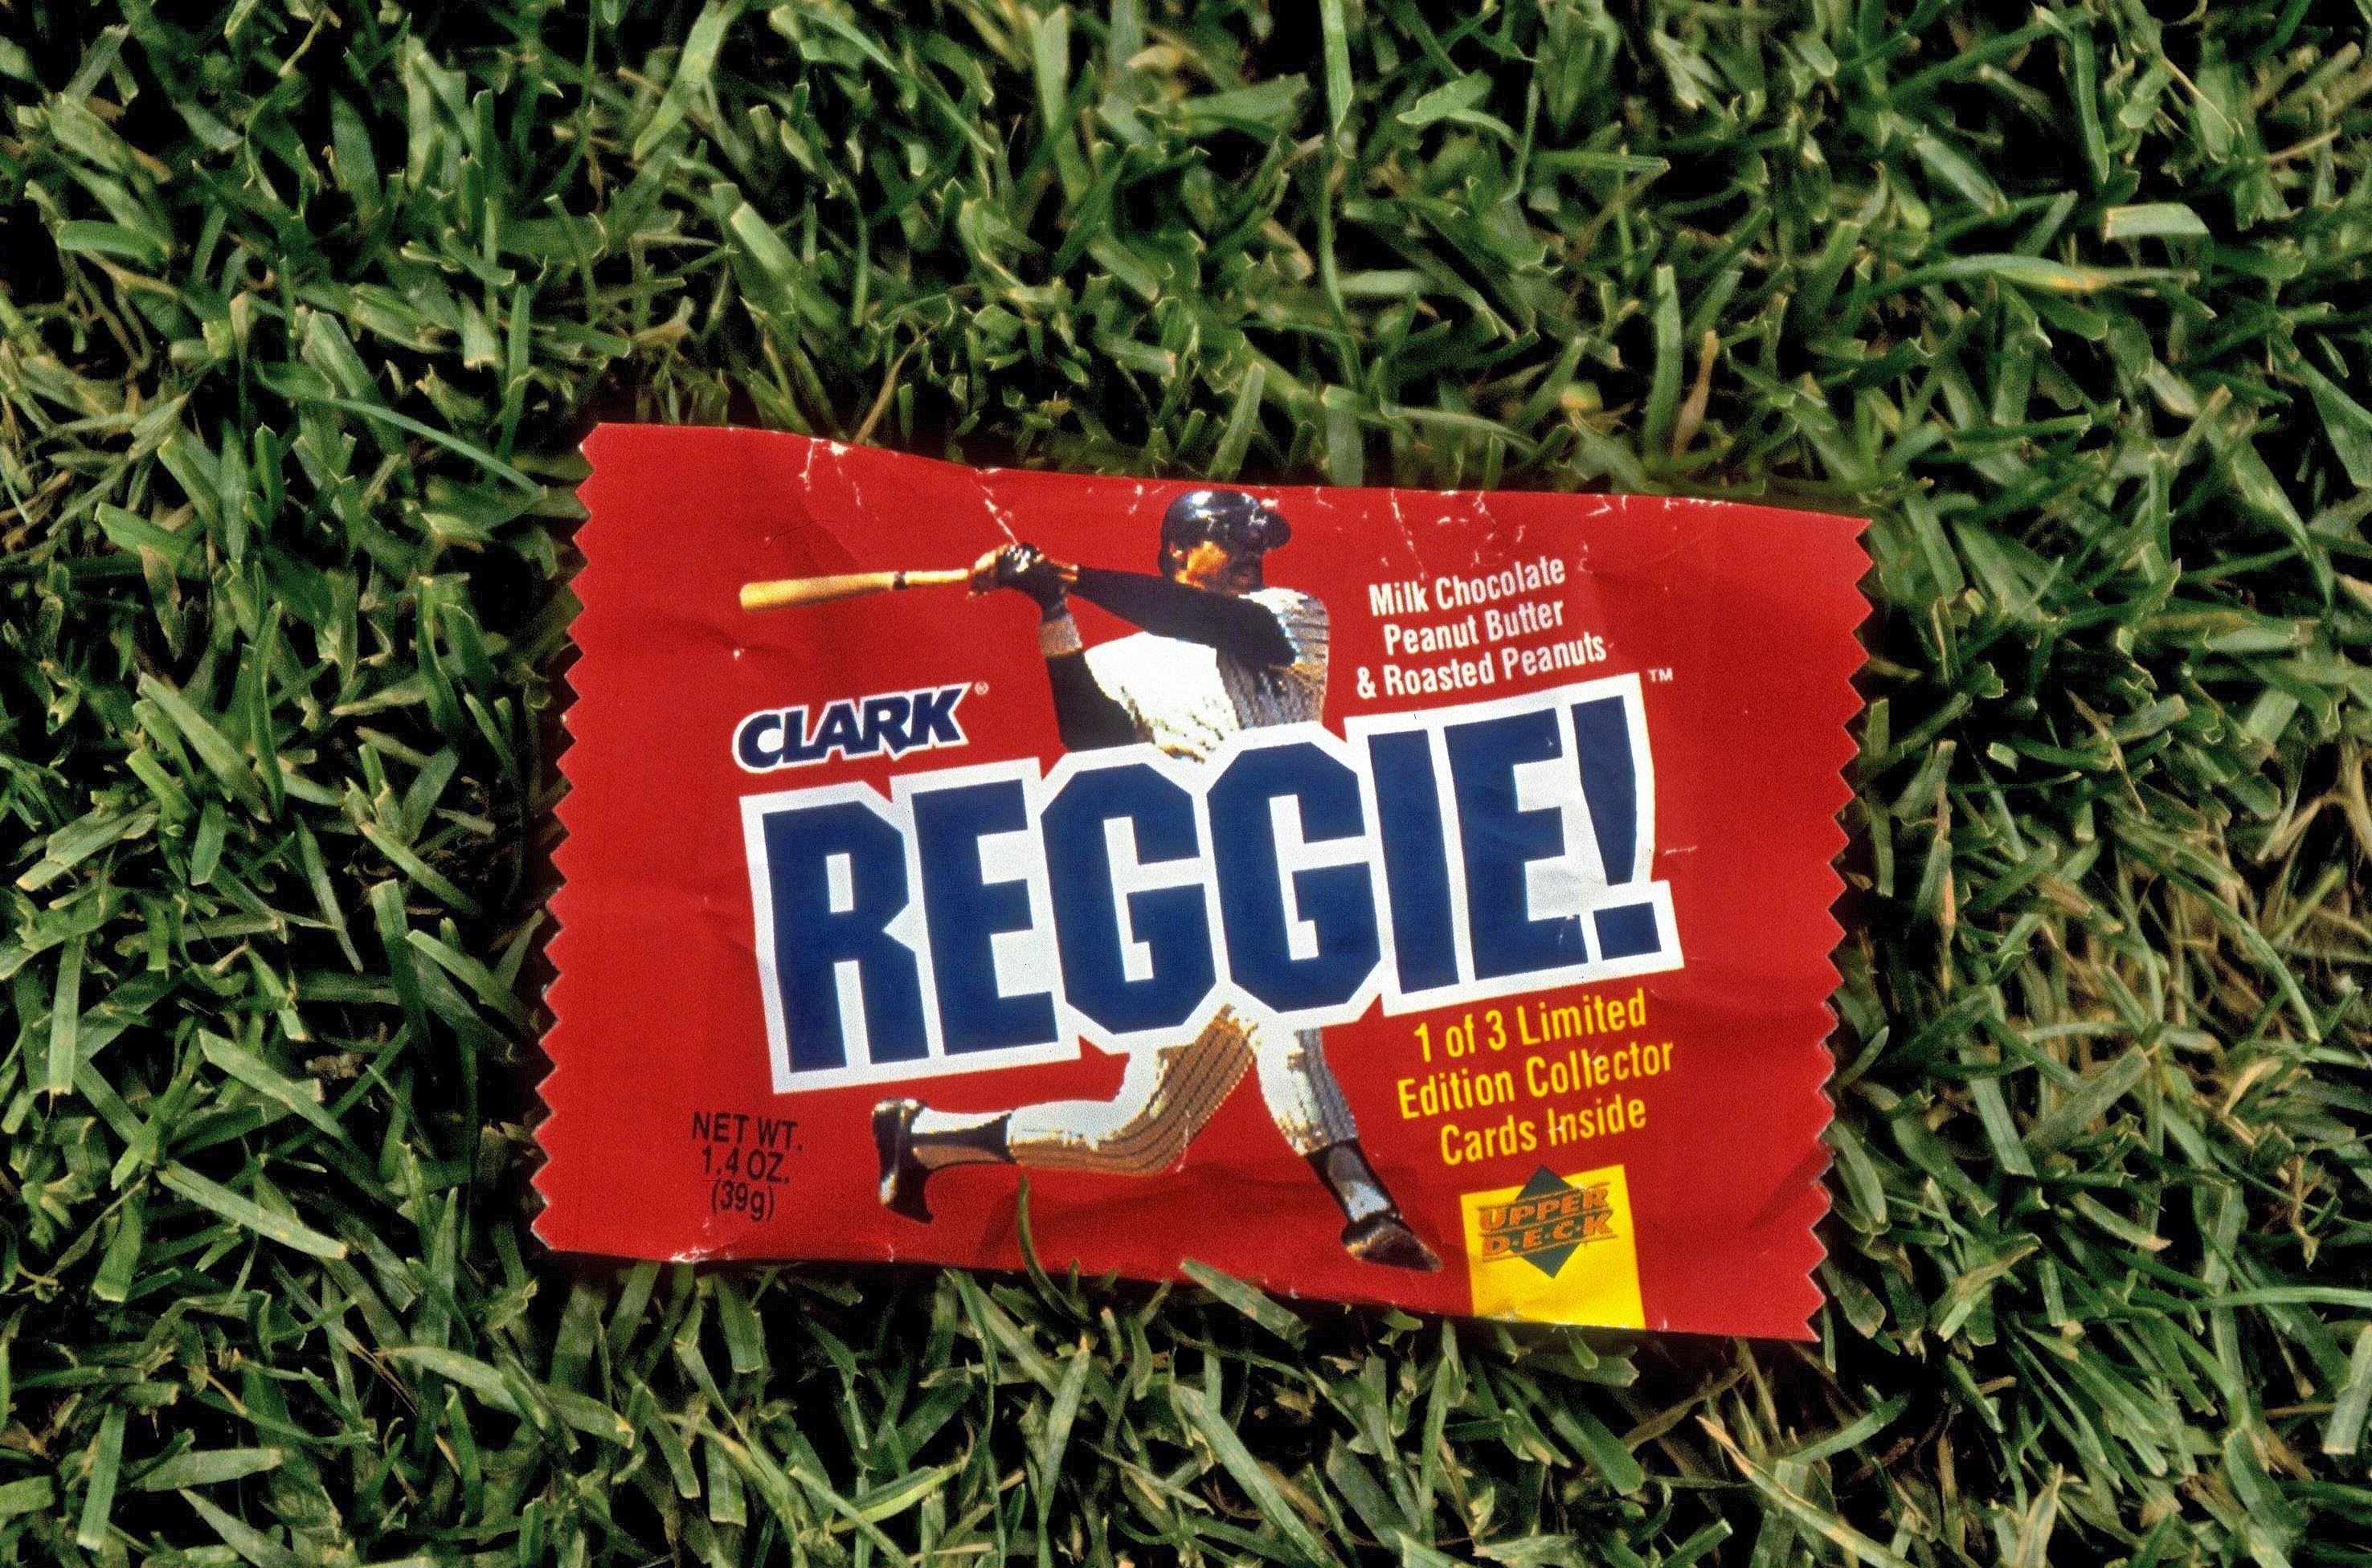 Reggie! Chocolate Bar